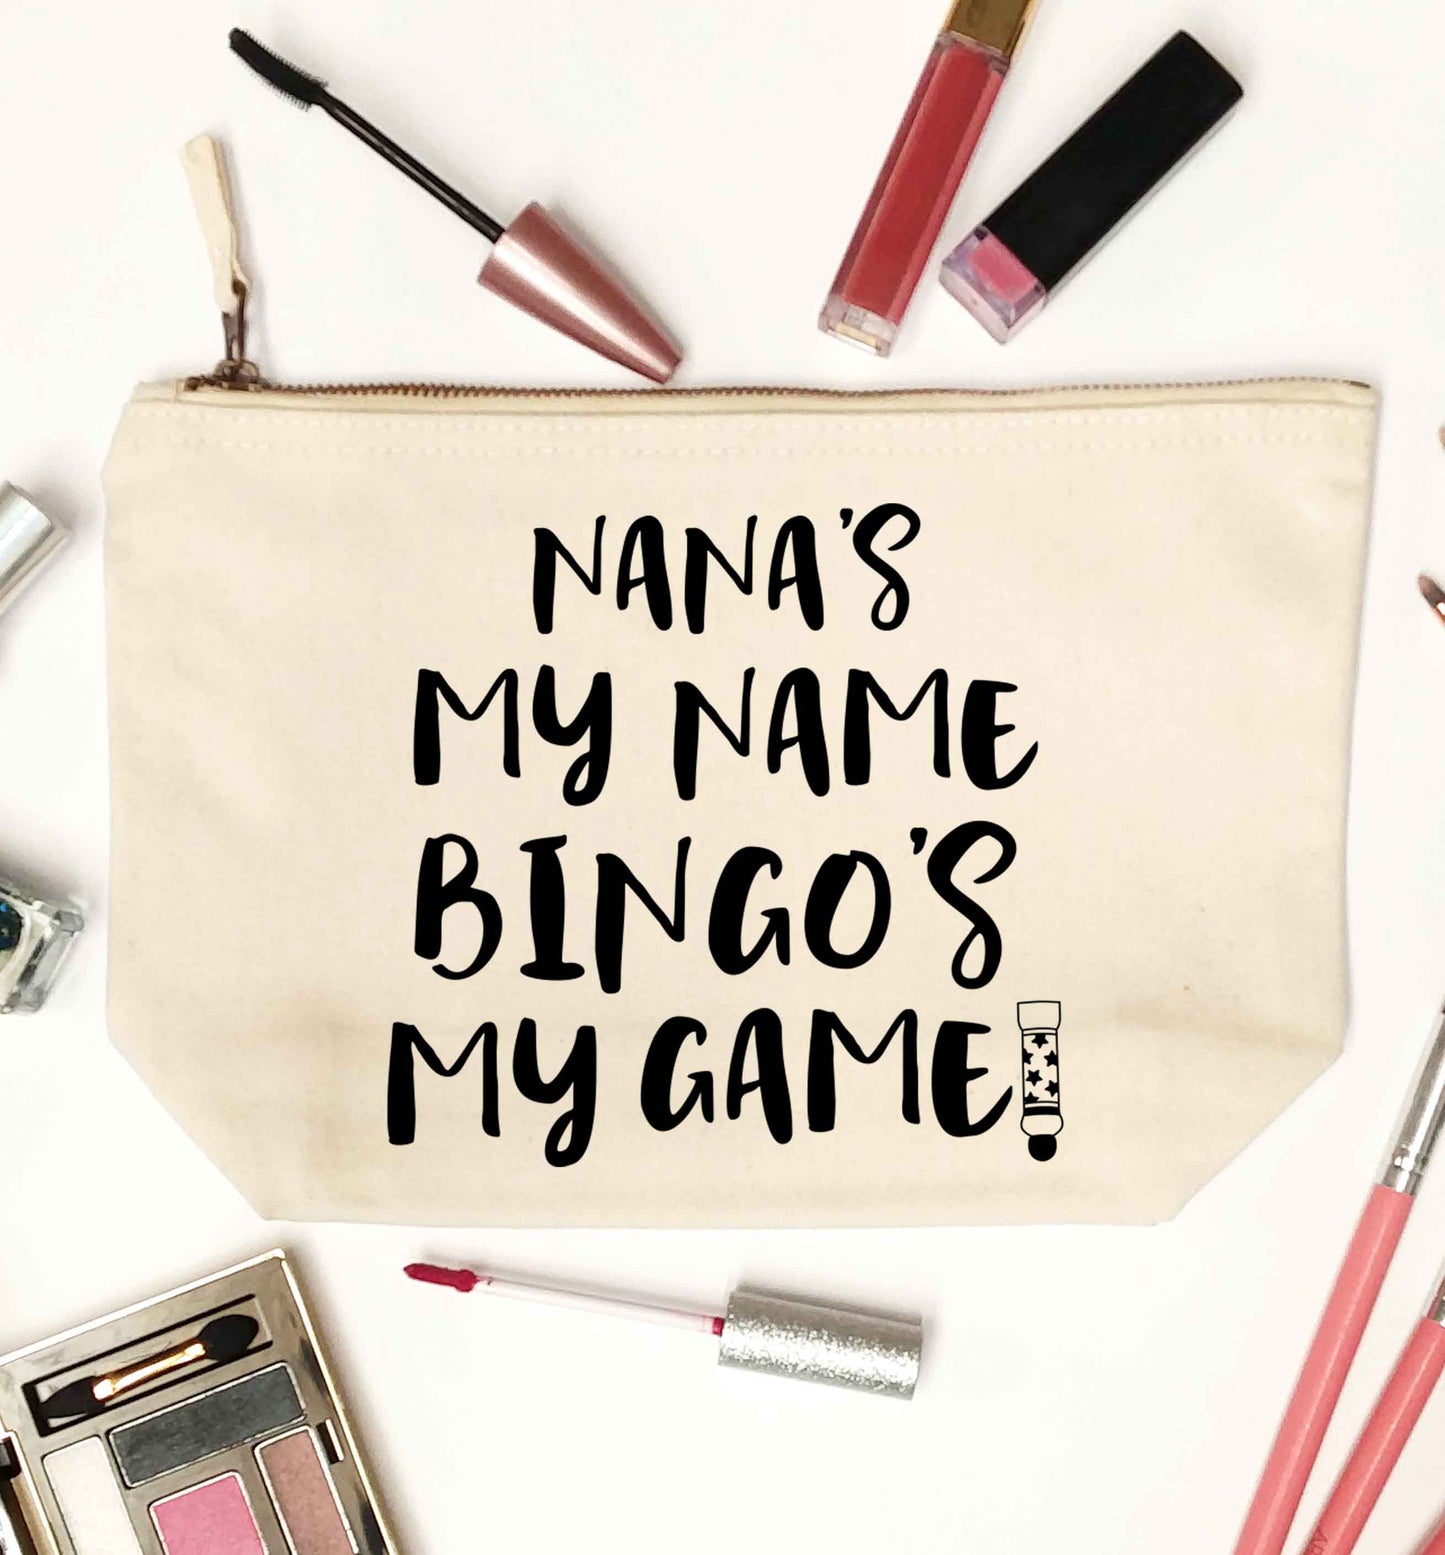 Nana's my name bingo's my game! natural makeup bag